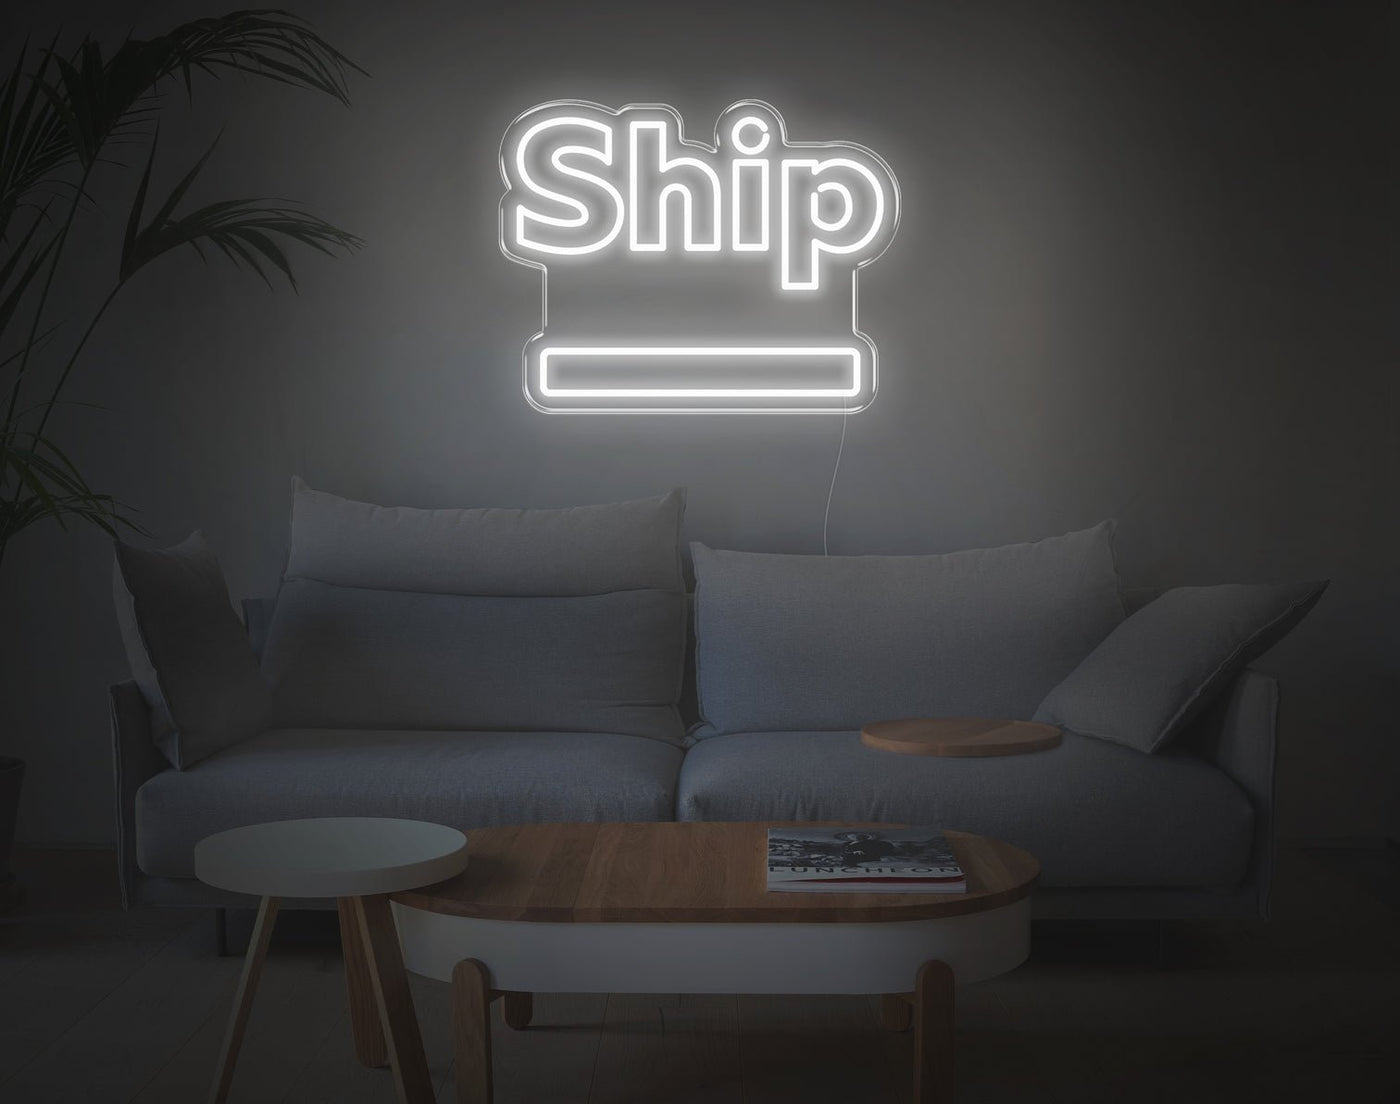 Ship LED Neon Sign - 15inch x 19inchWhite